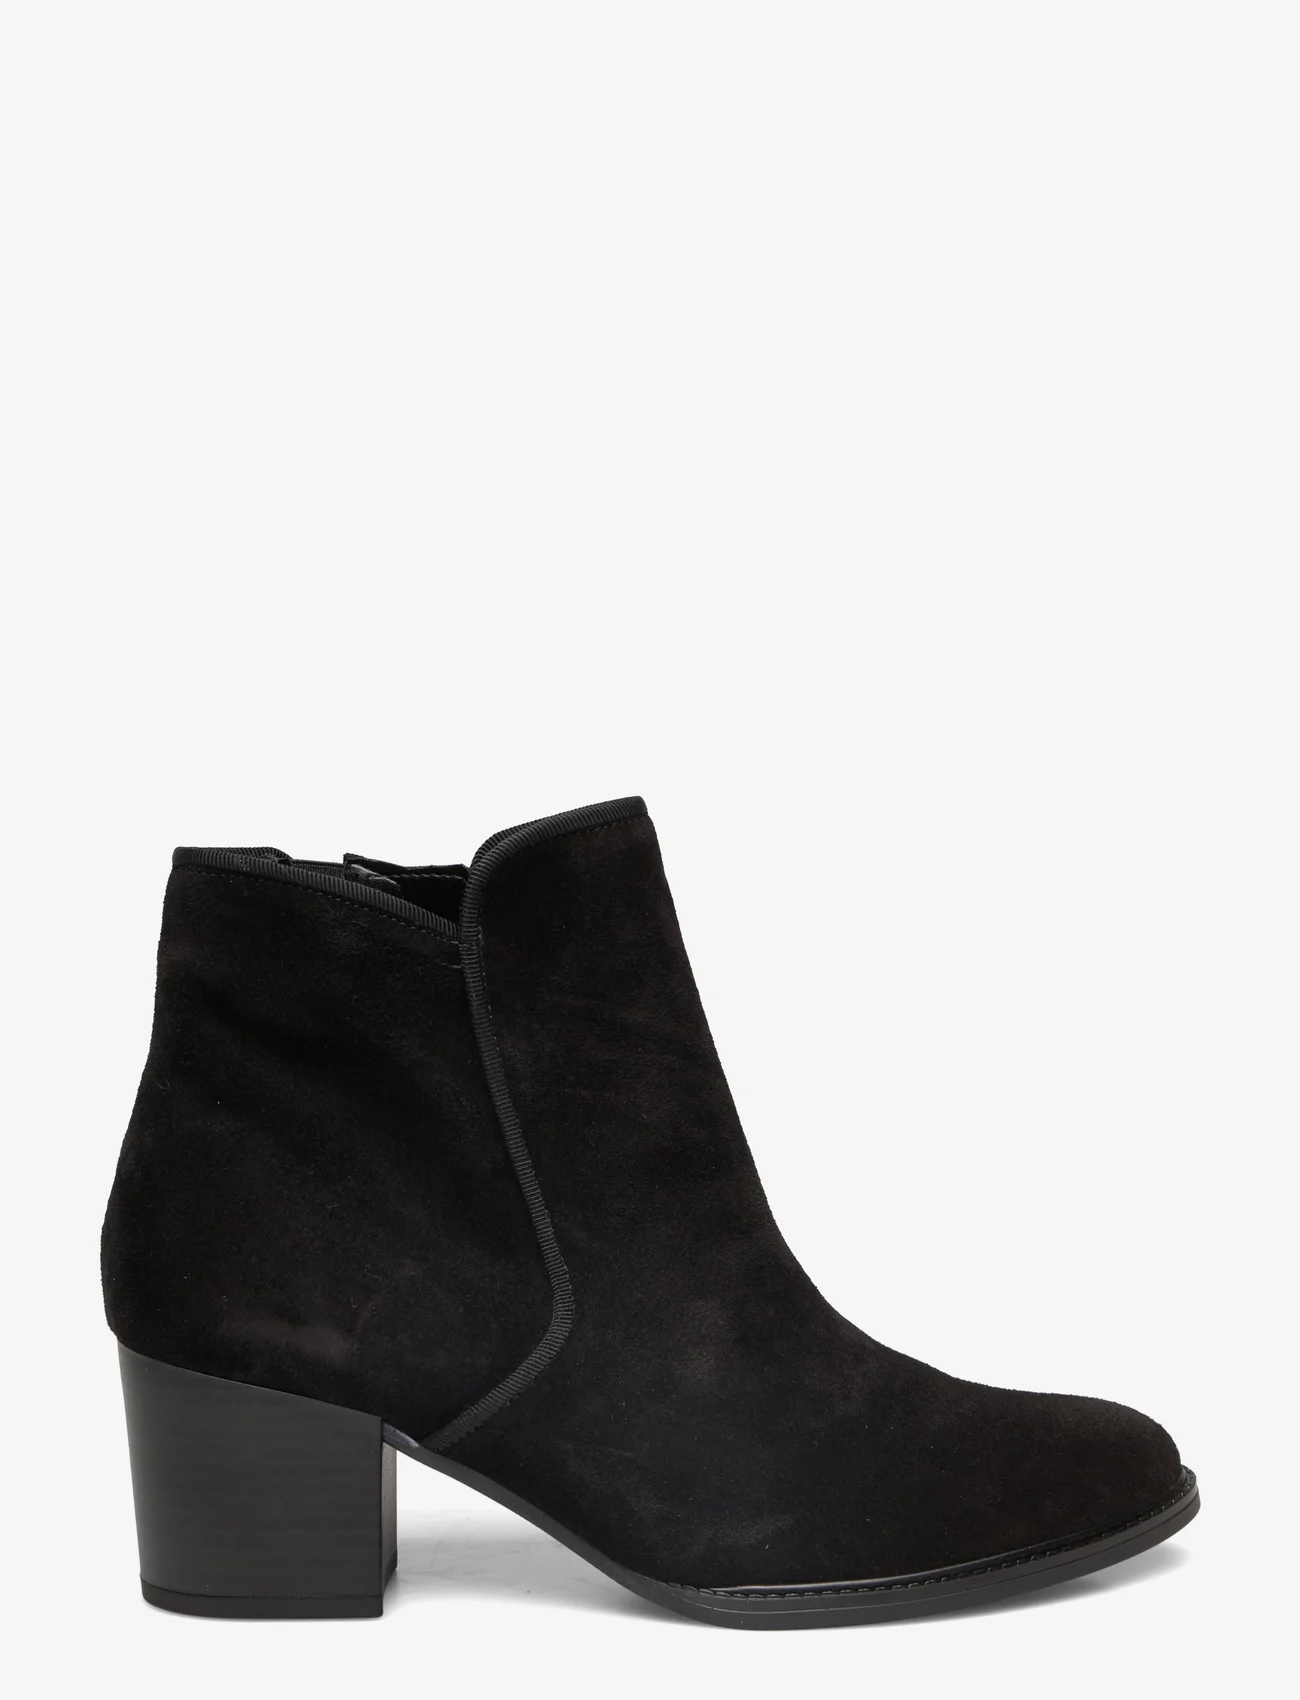 Gabor - Ankle boot - high heel - black - 1